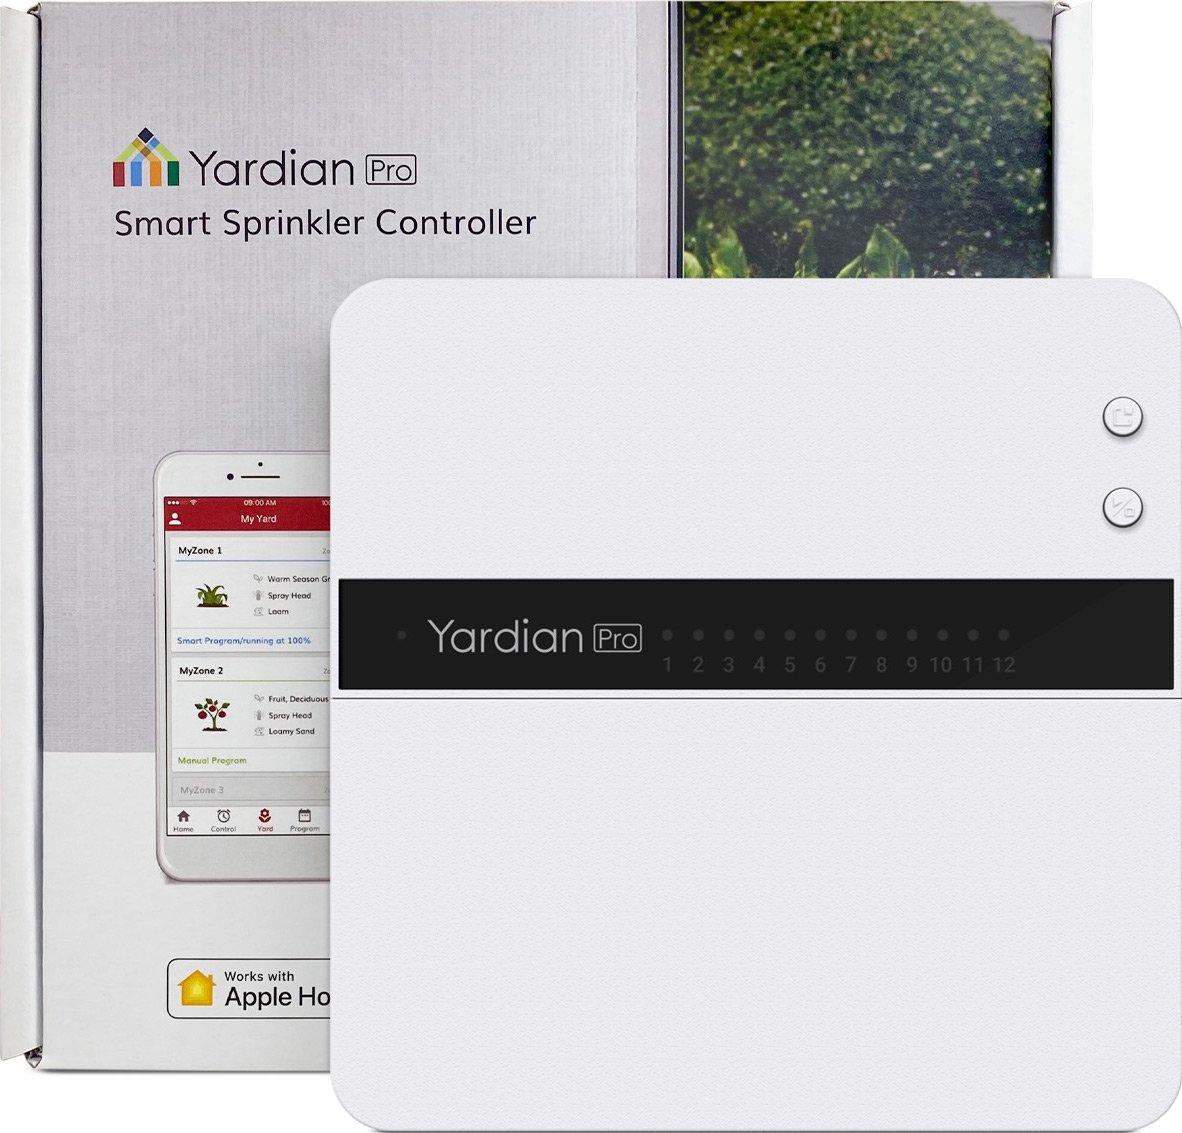 Yardian Pro Smart Sprinkler Controller and packaging